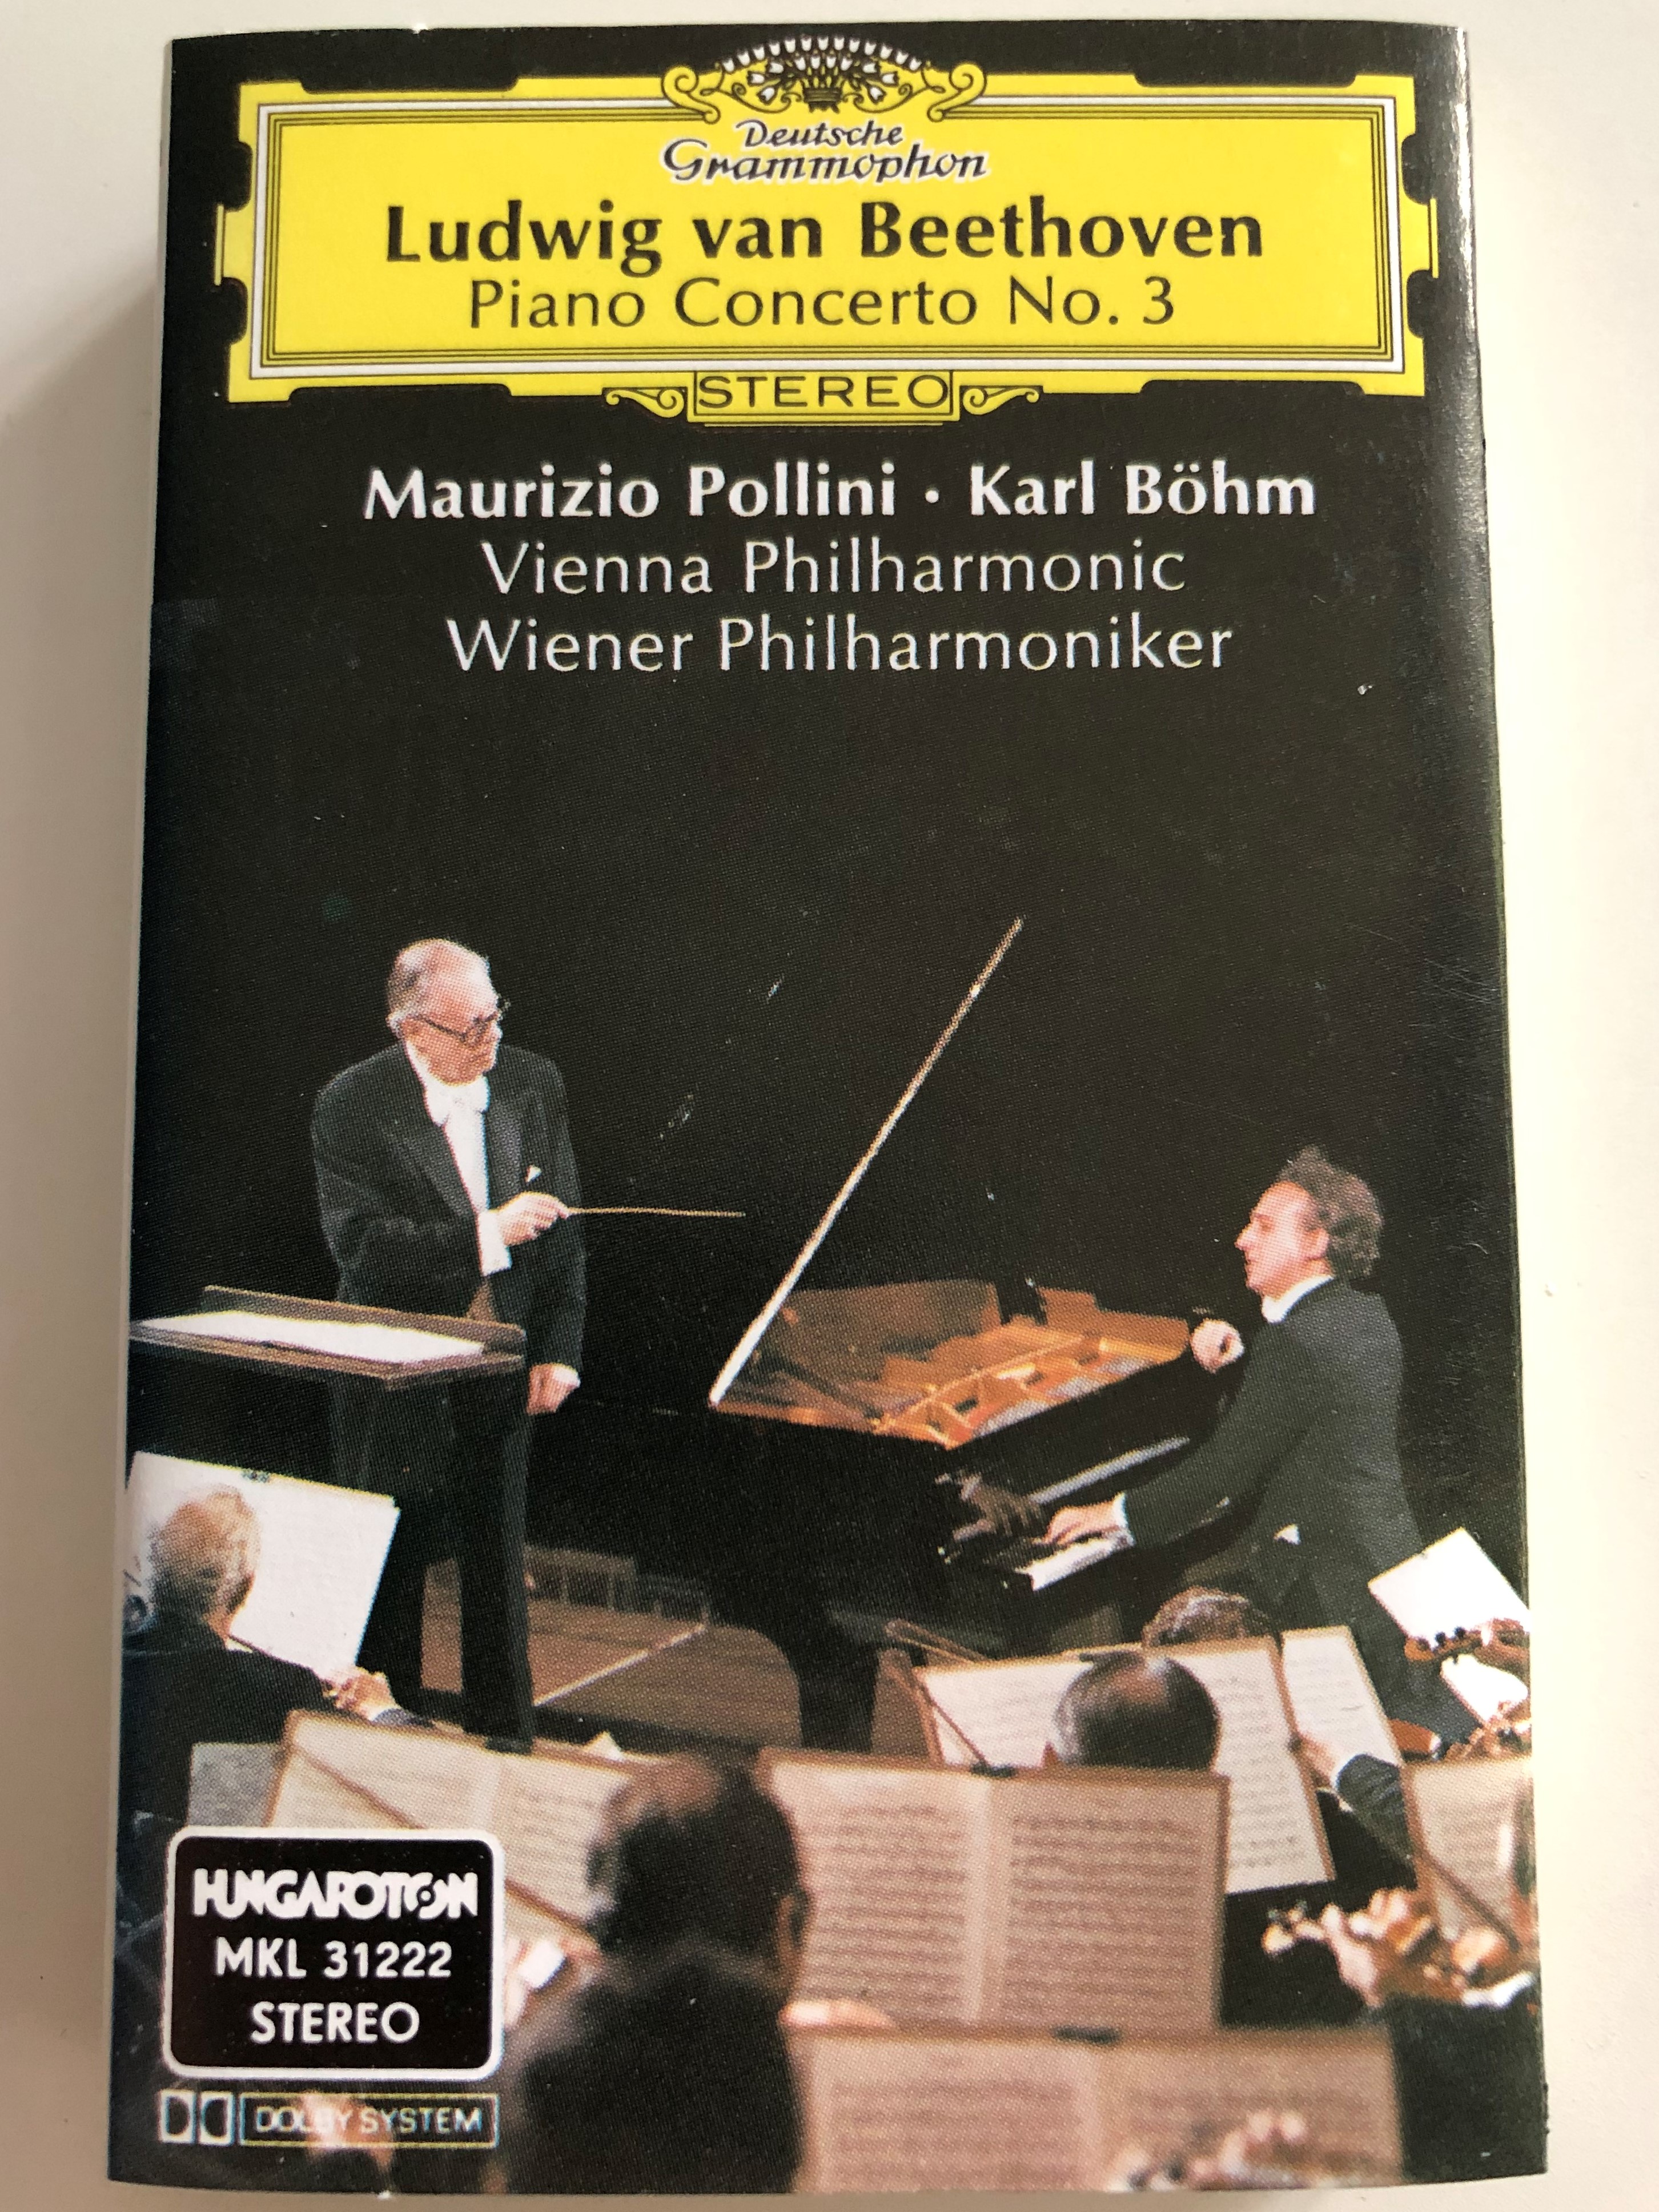 Ludwig van Beethoven - Piano Concerto No.3 / Maurizio Pollini, Karl Böhm /  Vienna Philharmonic / ‎Wienner Philharmoniker / Deutsche Grammophon  ‎CASSETTE STEREO / MKL 31222 - bibleinmylanguage